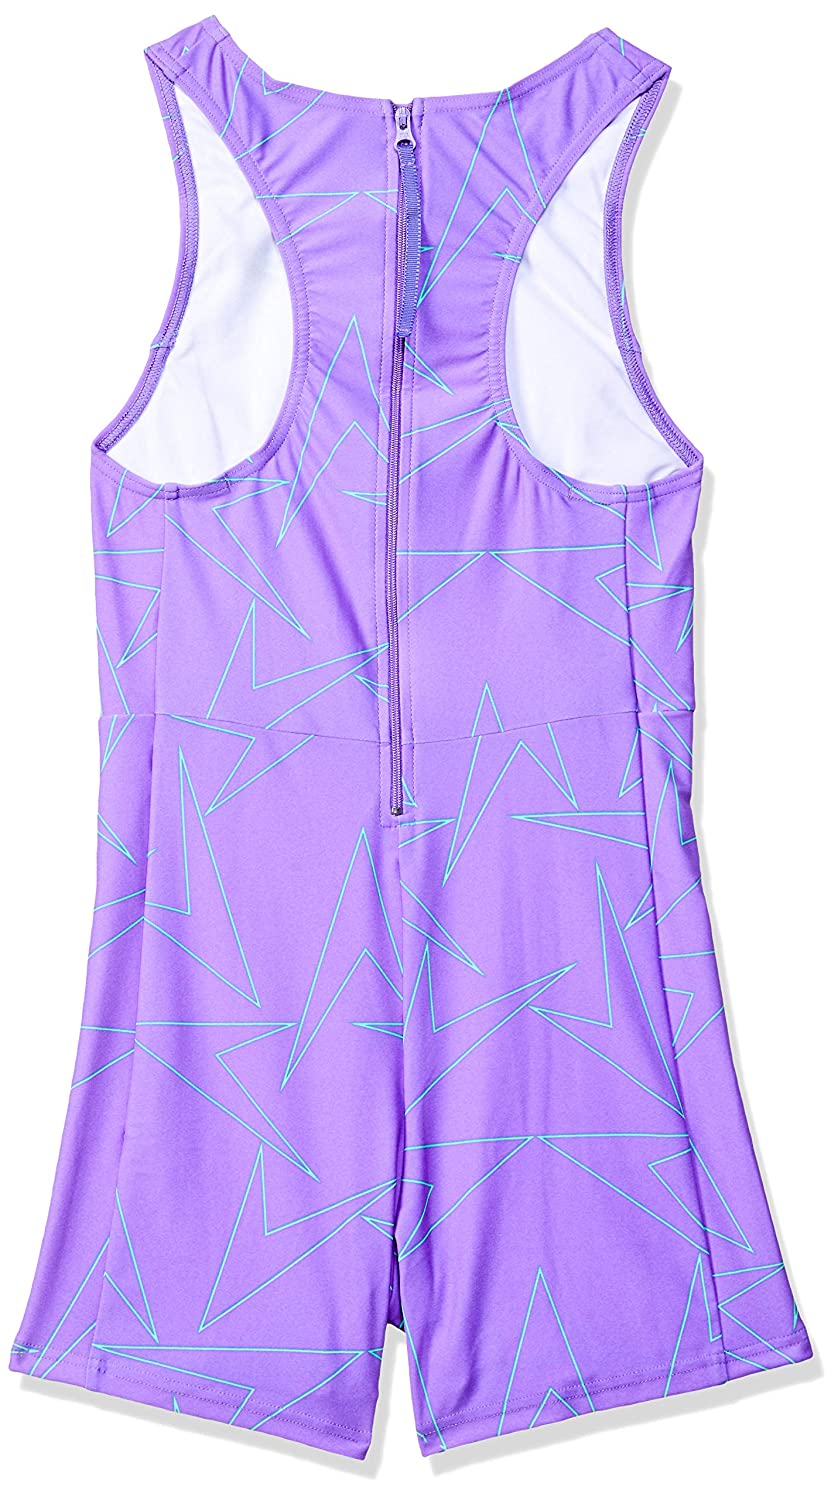 Speedo Boomstar Allover Legsuit for Girls (Color: Ultra Violet/Green Glow) - Best Price online Prokicksports.com